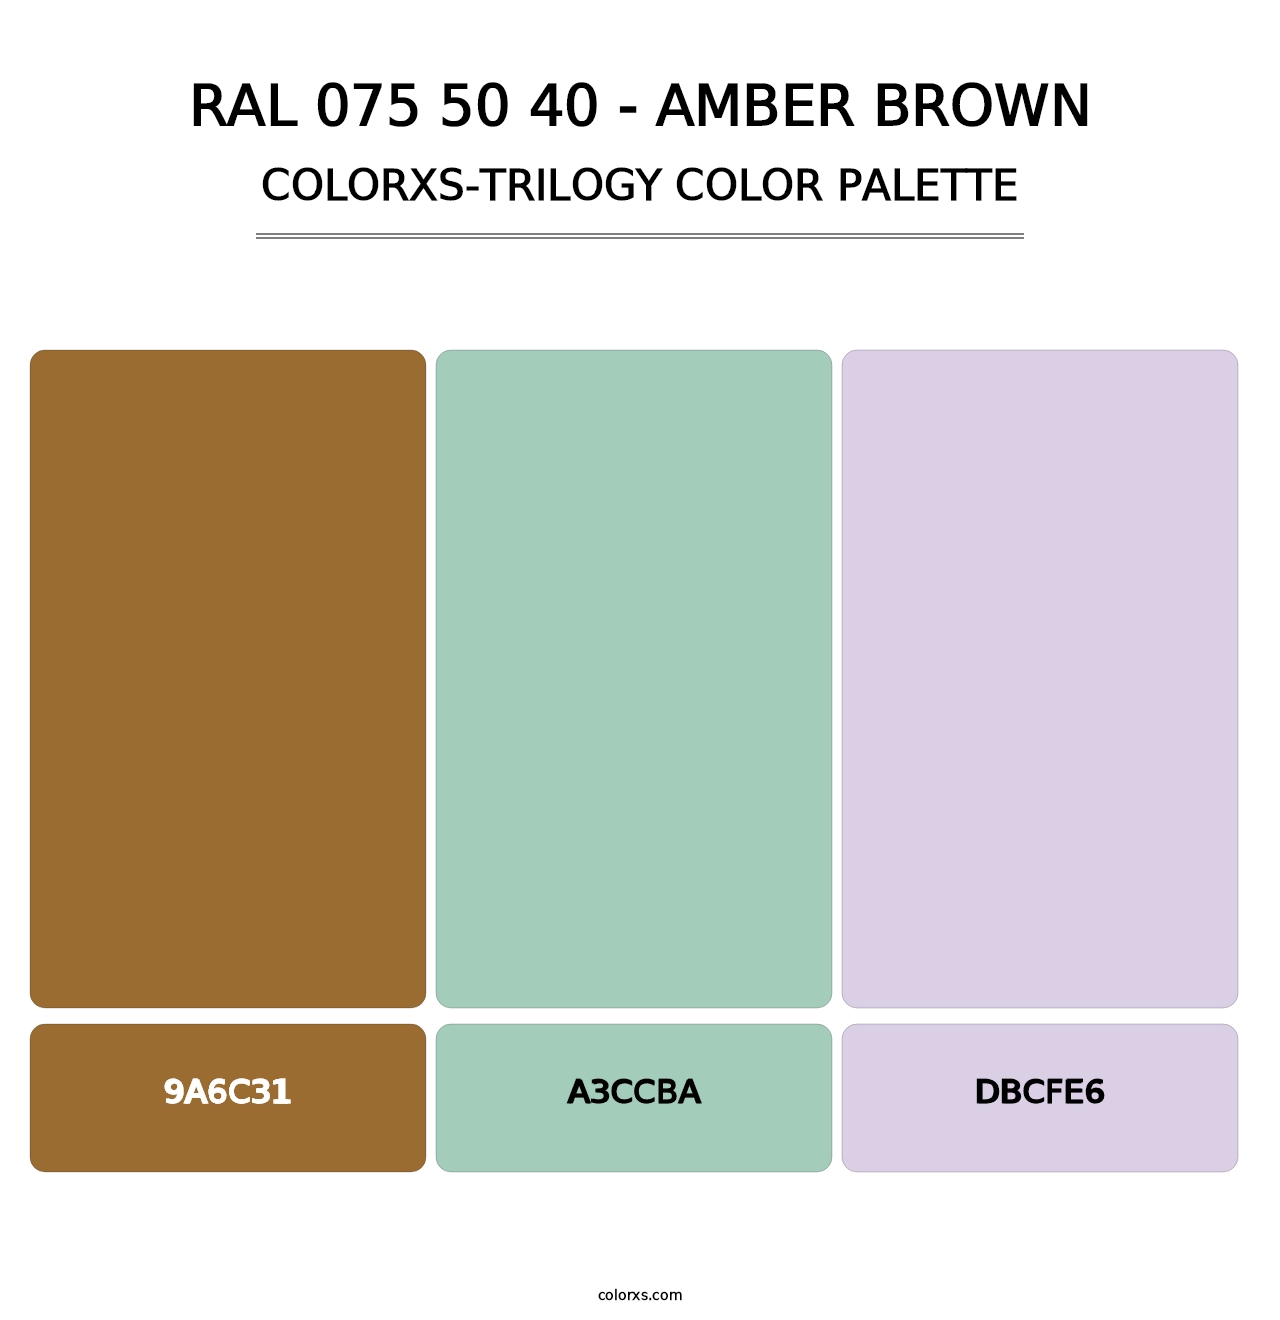 RAL 075 50 40 - Amber Brown - Colorxs Trilogy Palette